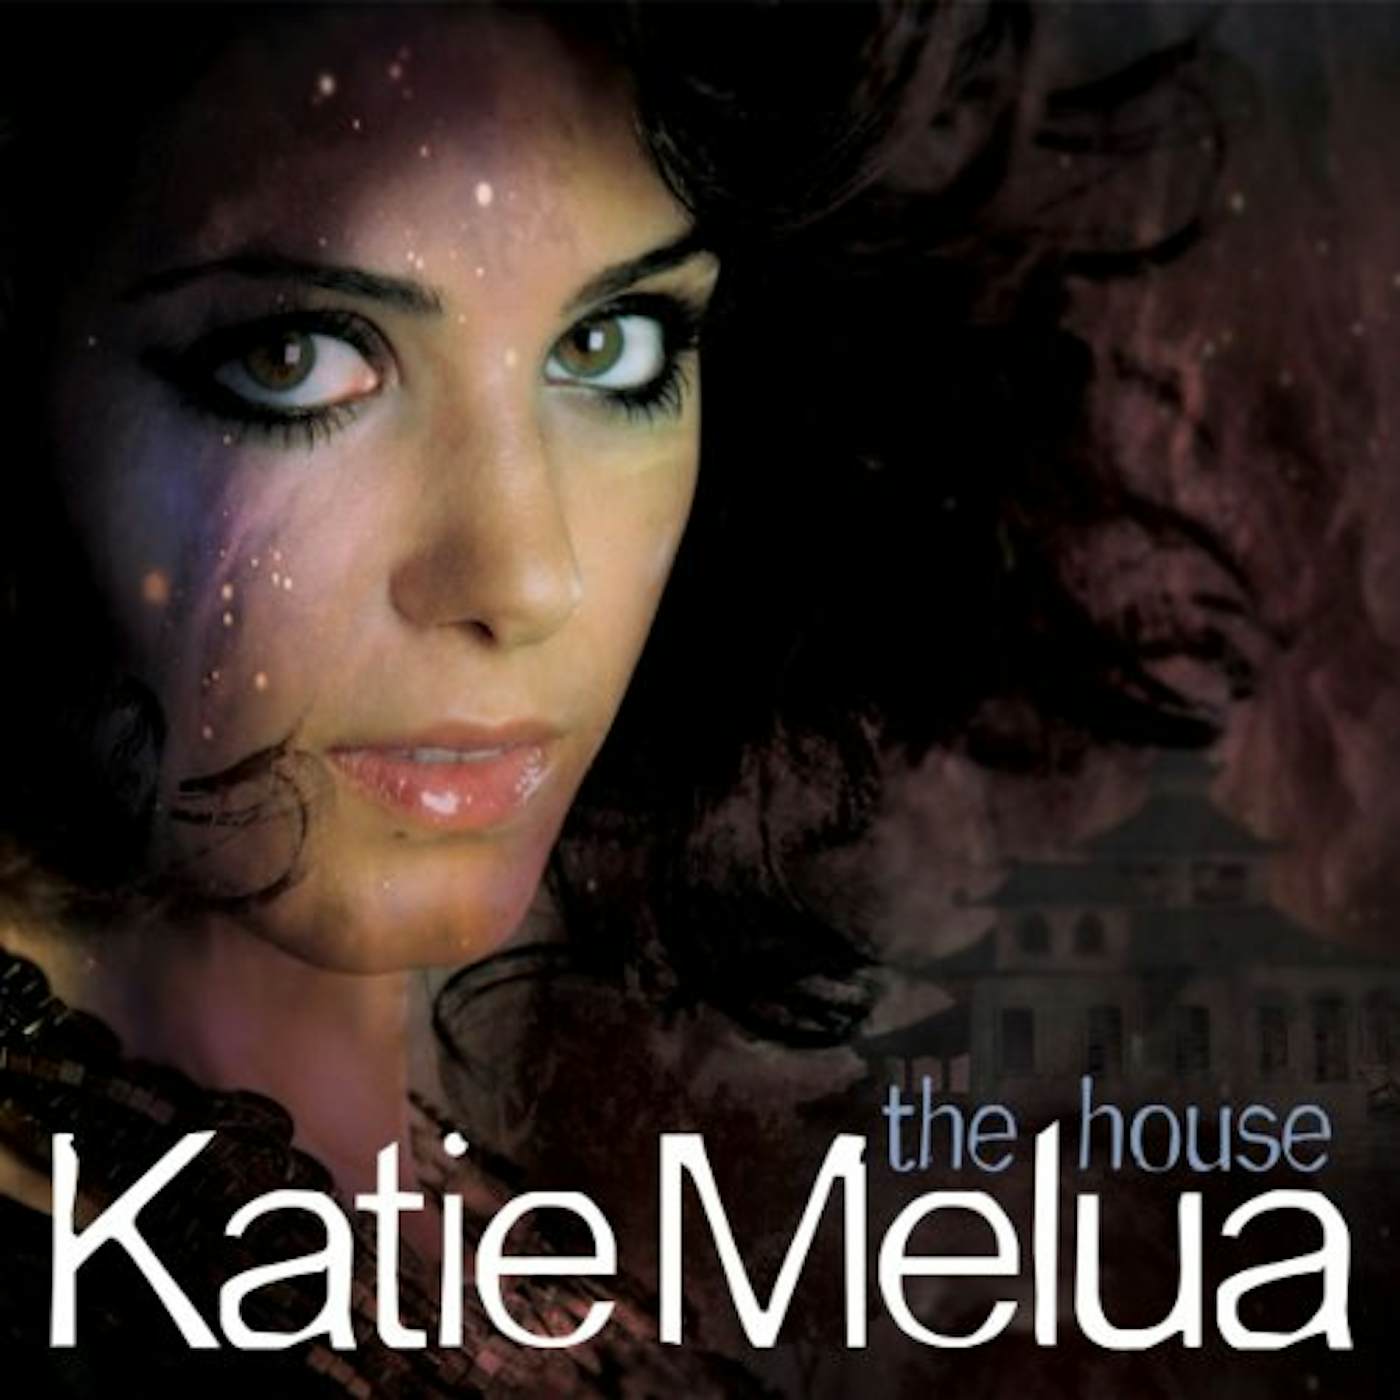 Katie Melua HOUSE Vinyl Record - 180 Gram Pressing